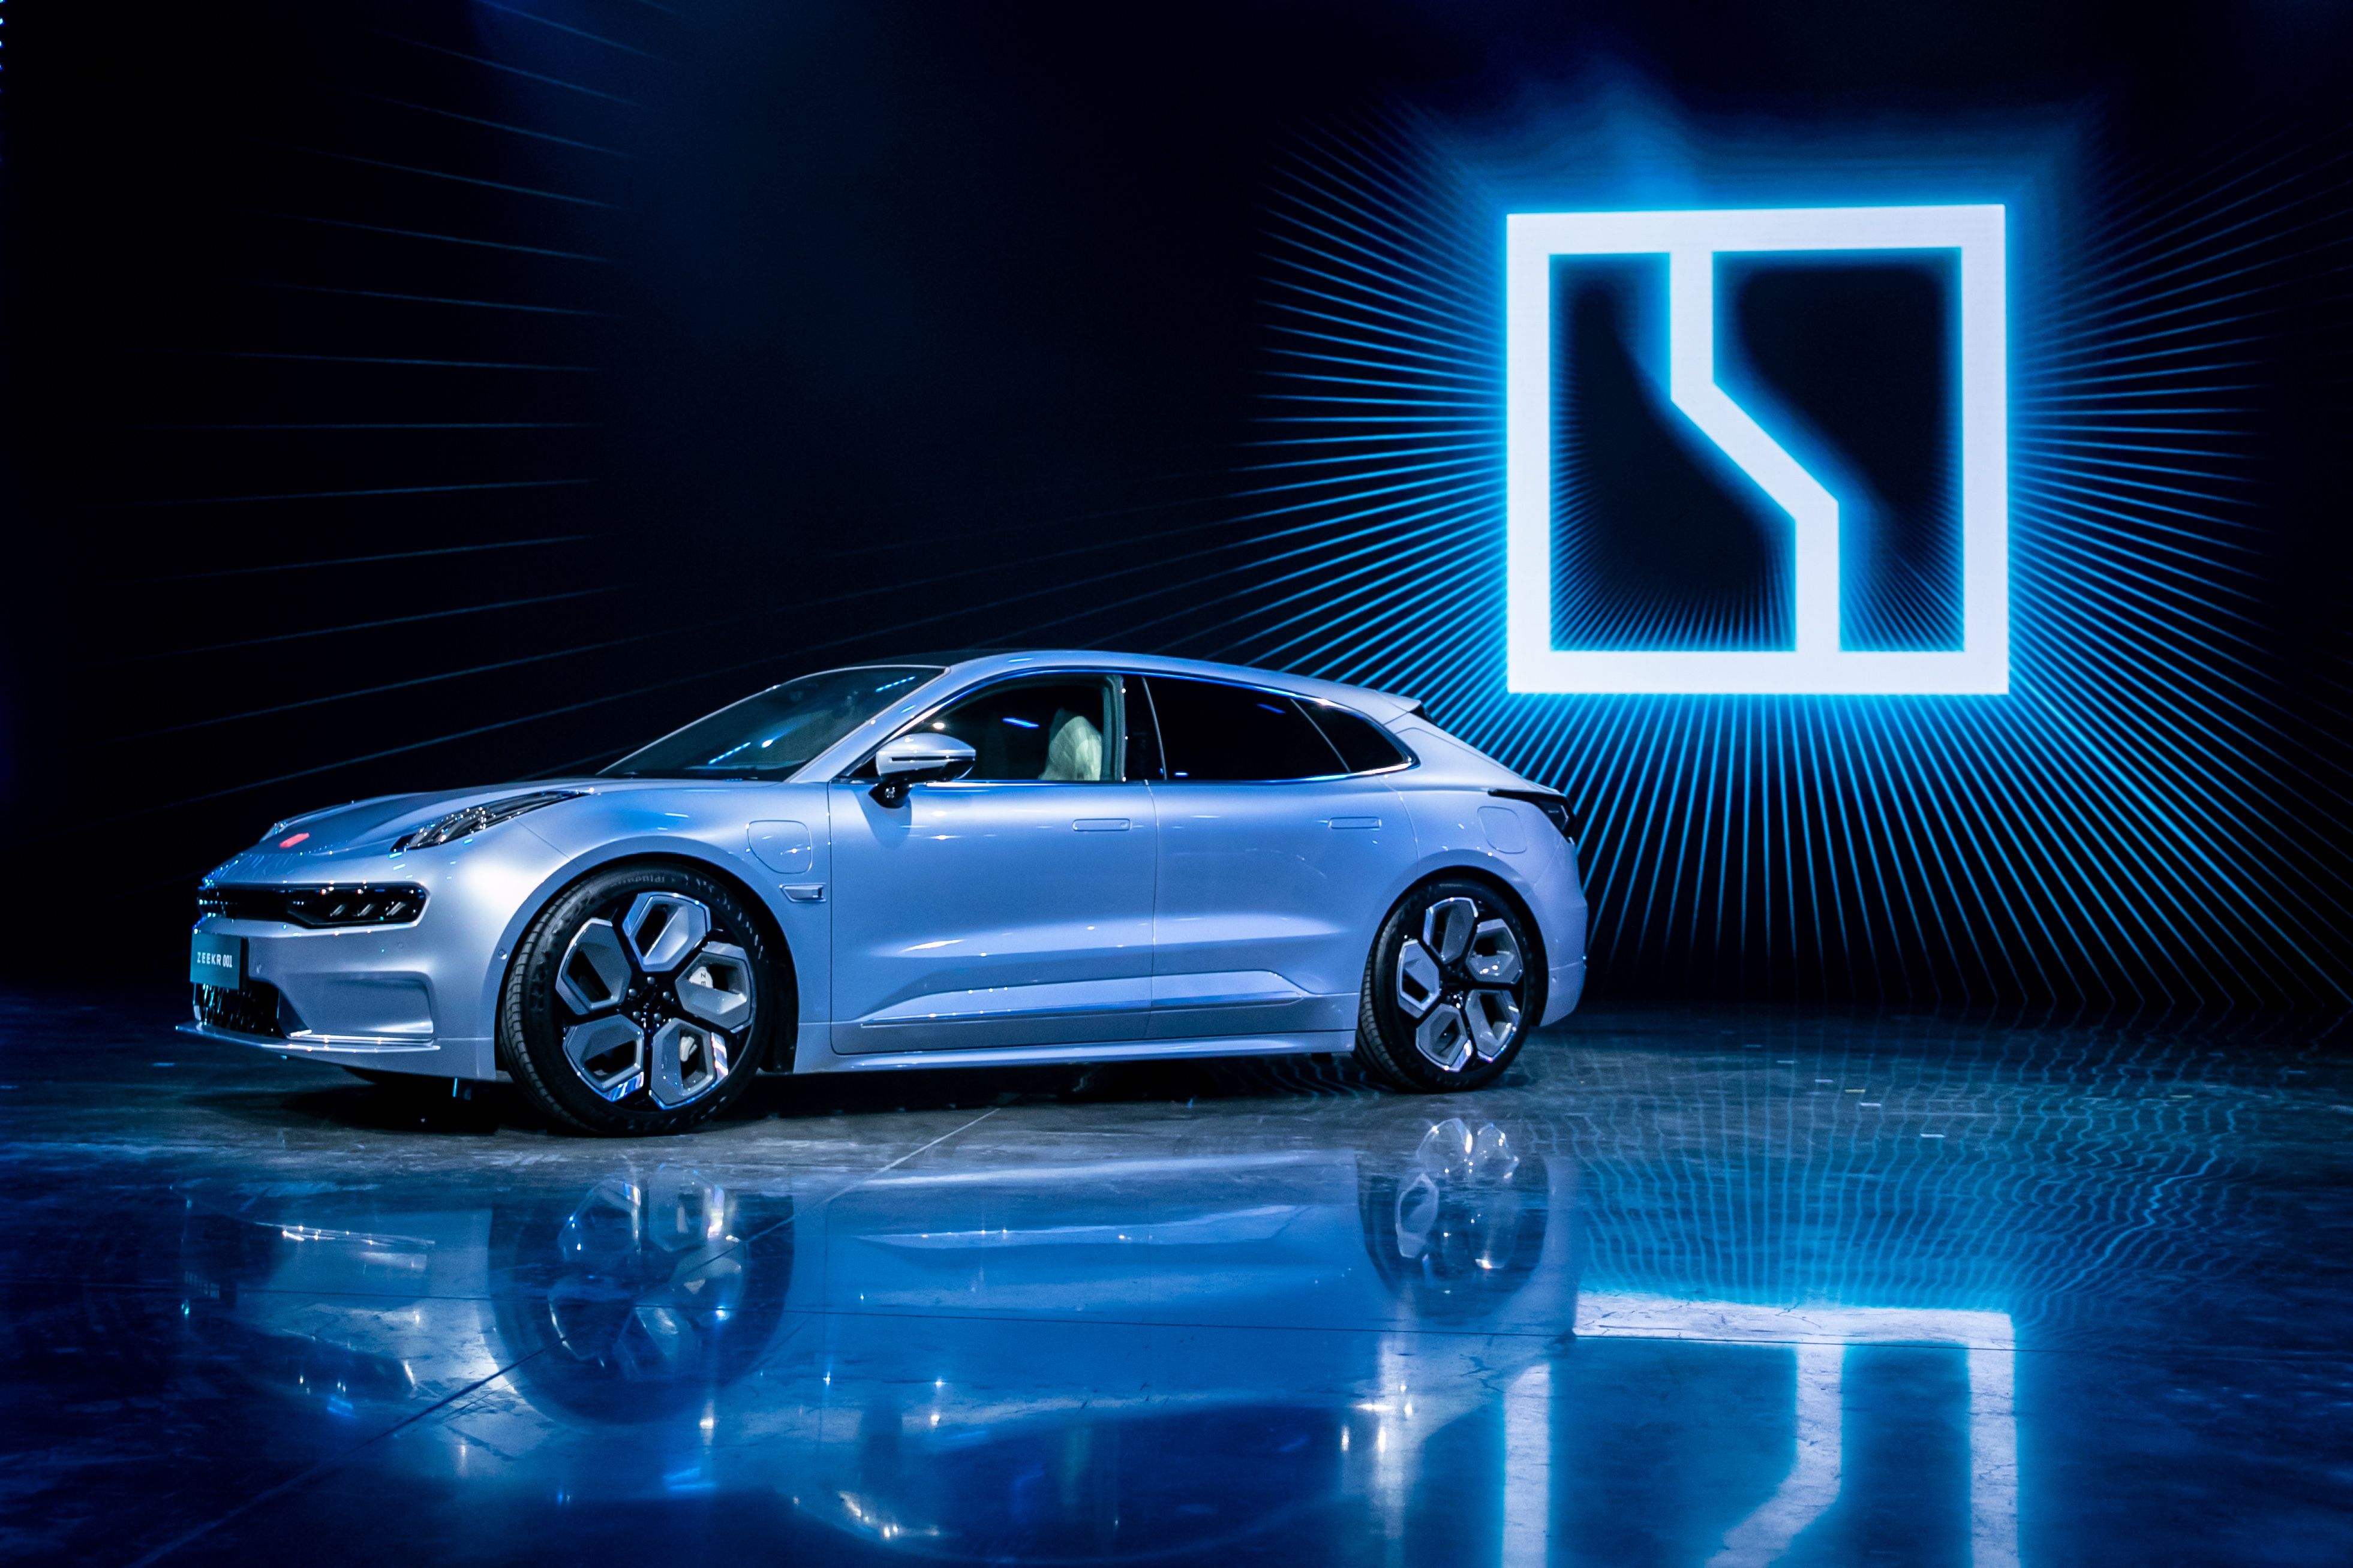 The Audi A6 E-Tron Concept Will Go Into Production in 2022: Report